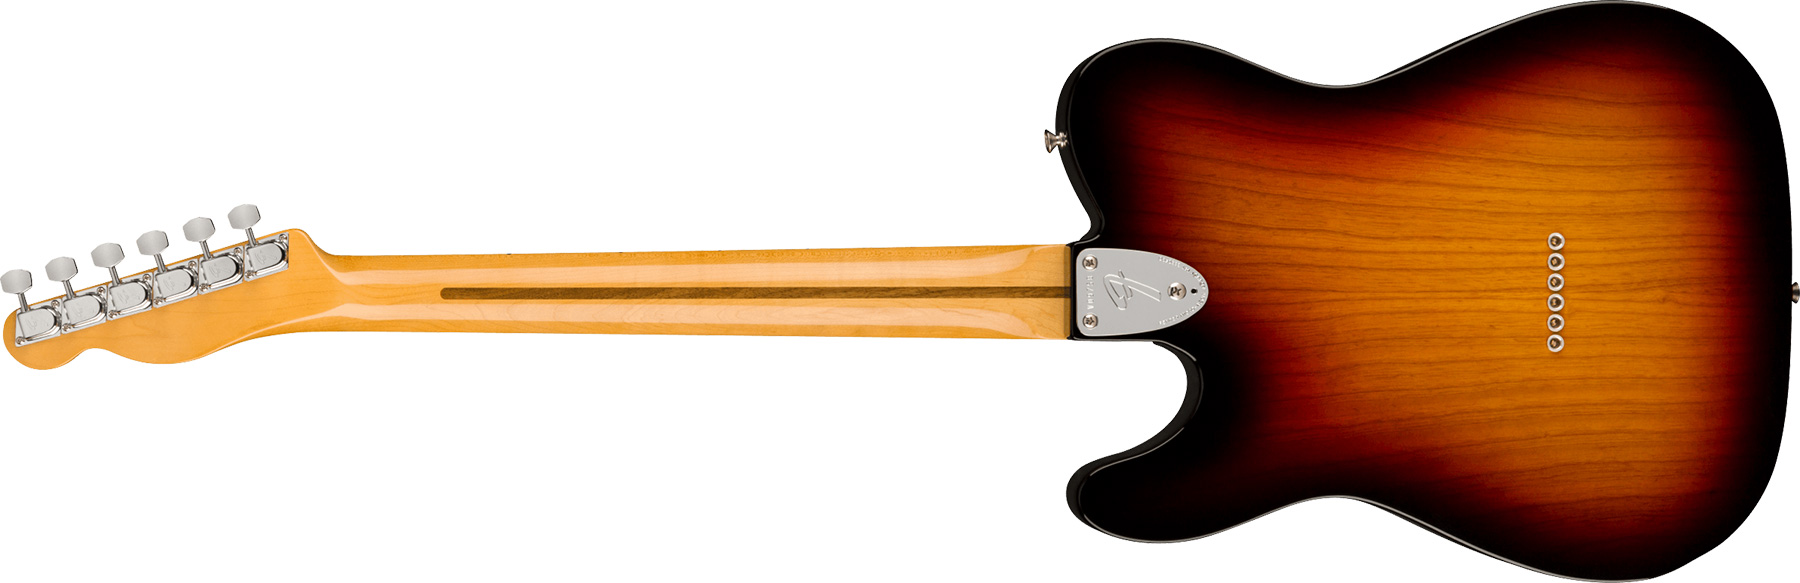 Fender Tele Thinline 1972 American Vintage Ii Usa 2h Ht Mn - 3-color Sunburst - Guitarra eléctrica con forma de tel - Variation 1